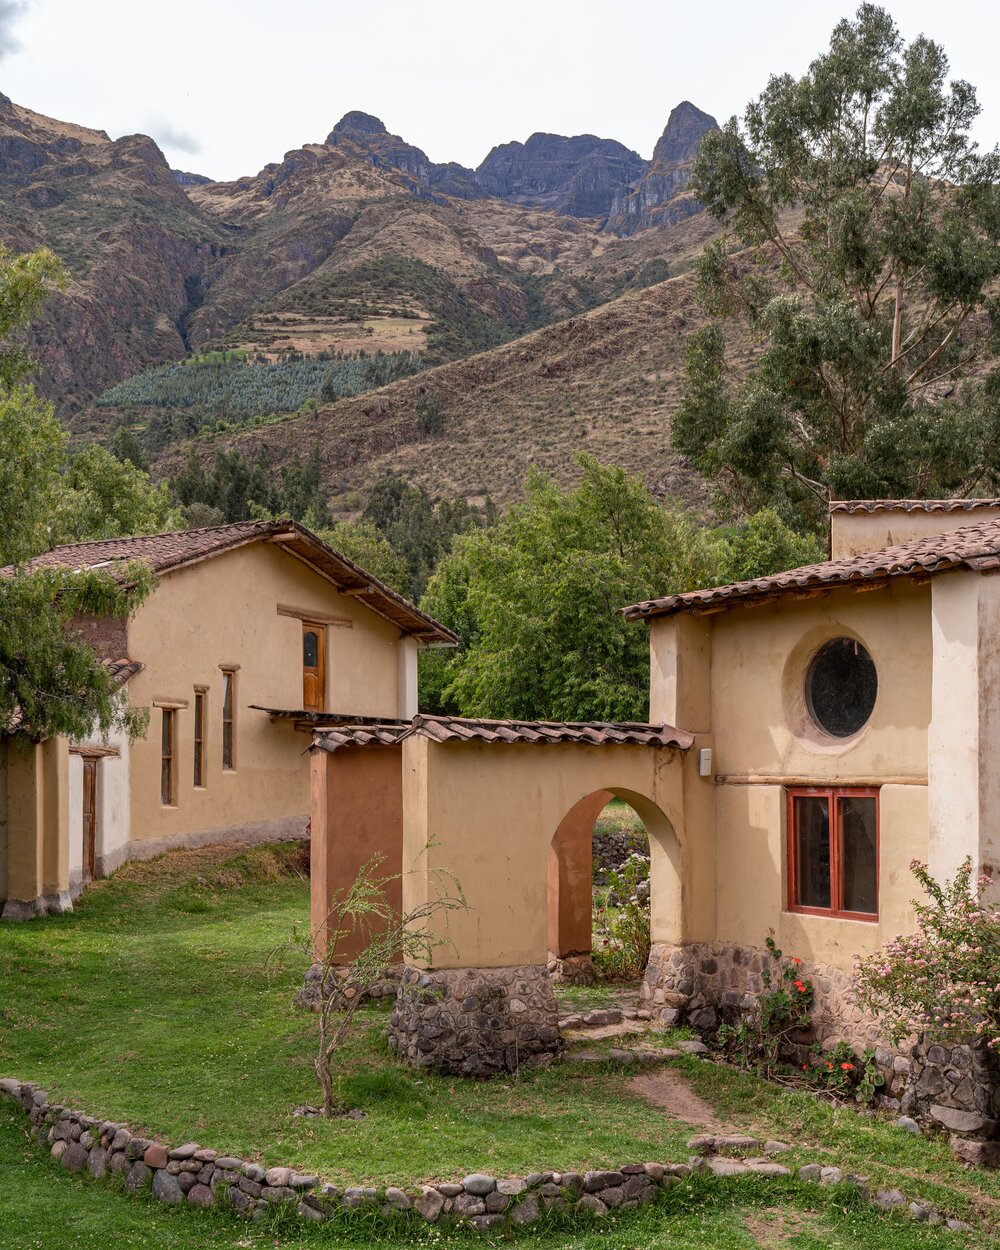 285_Wasim Muklashy Photography_Andes Mountains_Peru_Quechua Benefit_Cusco_Cuzco_Sacred Valley.jpg